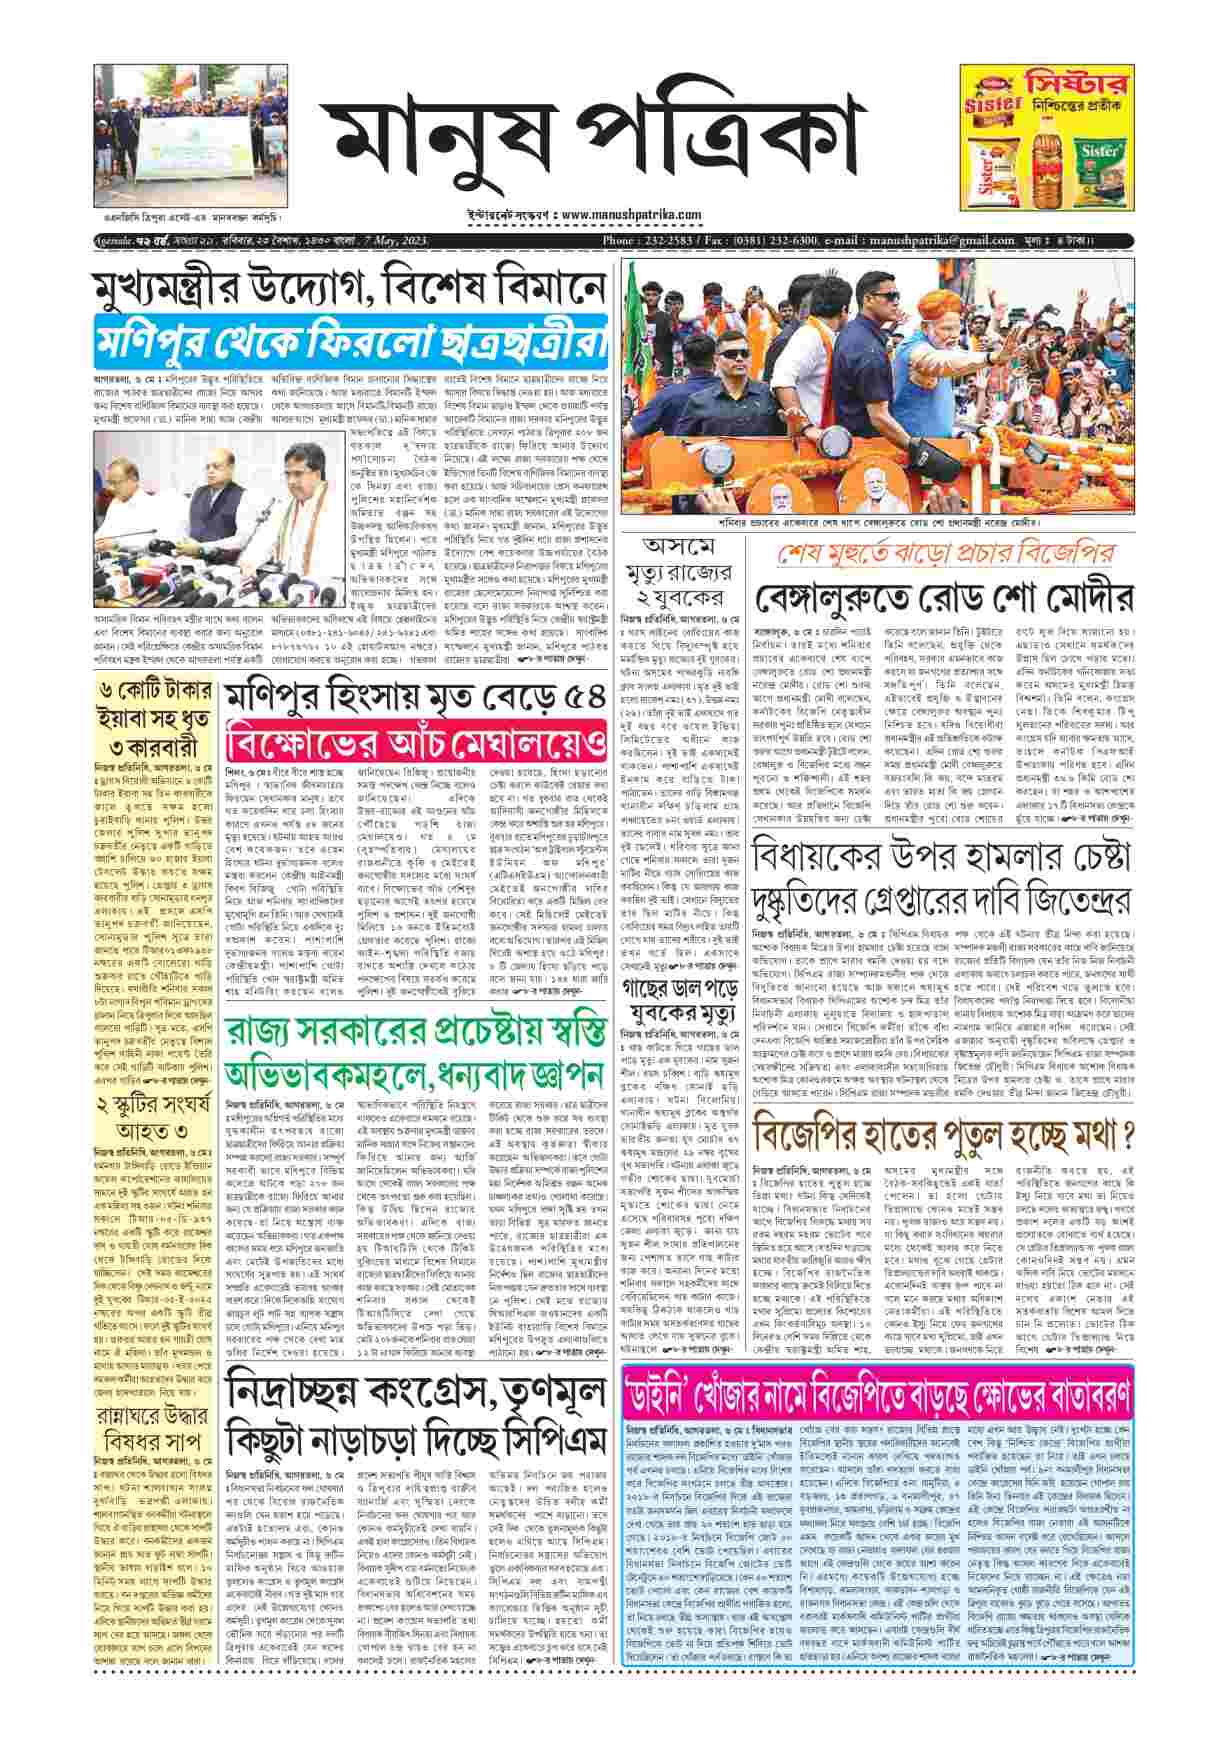 Read Manush Patrika Epaper